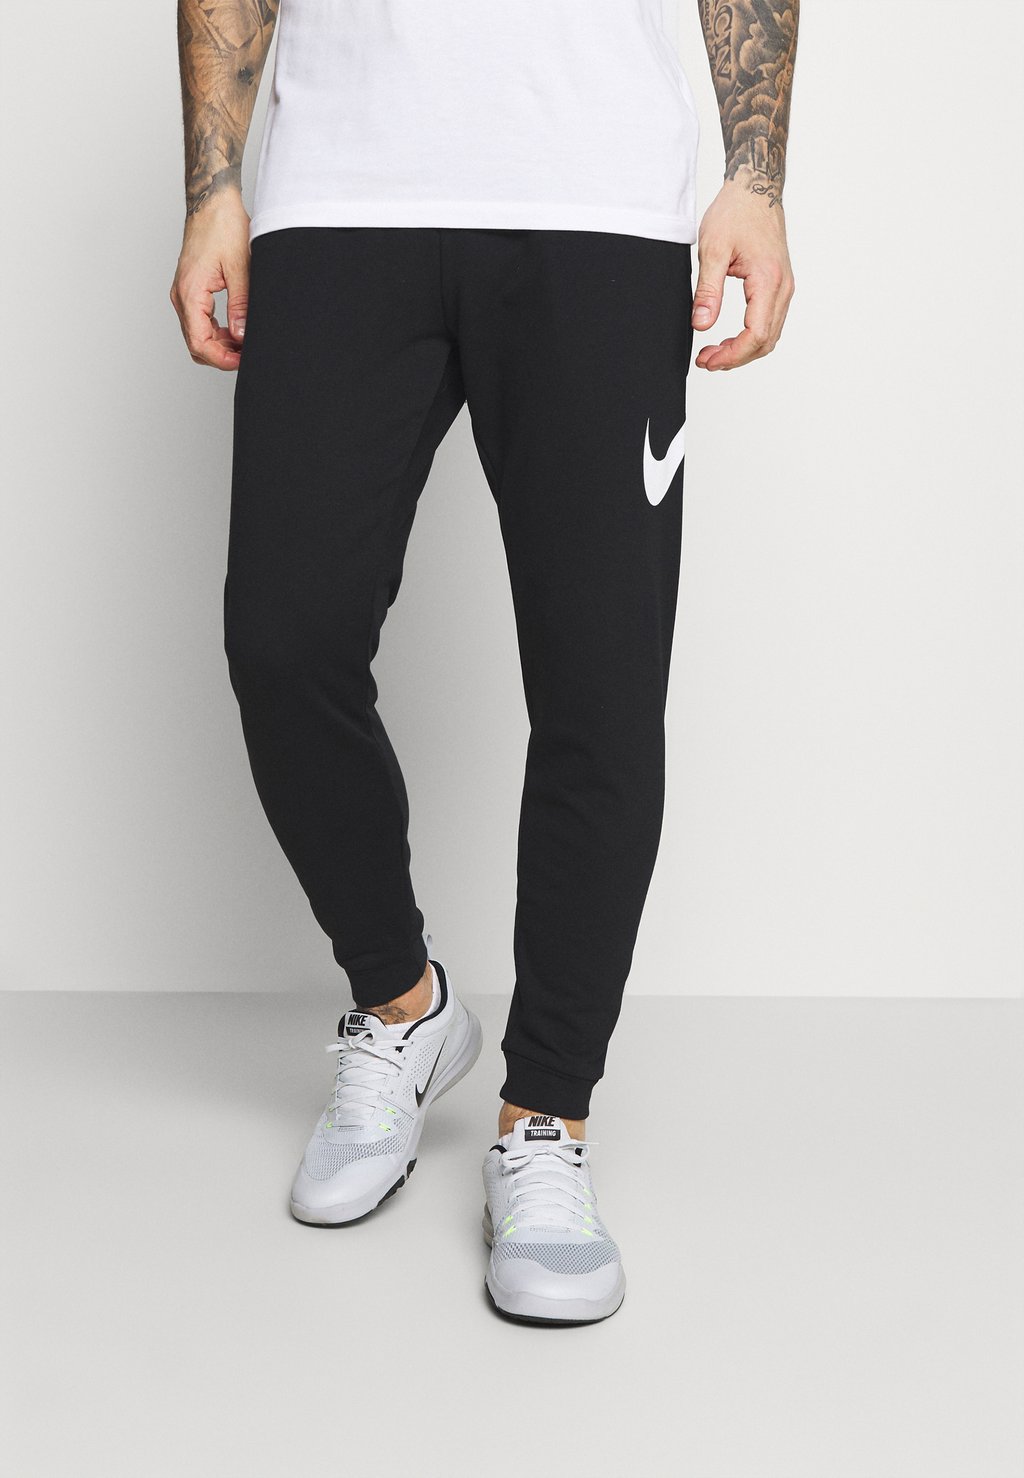 Спортивные брюки M NK DRY PANT TAPER FA SWOOSH Nike, черный/белый спортивные брюки pant taper nike черный белый